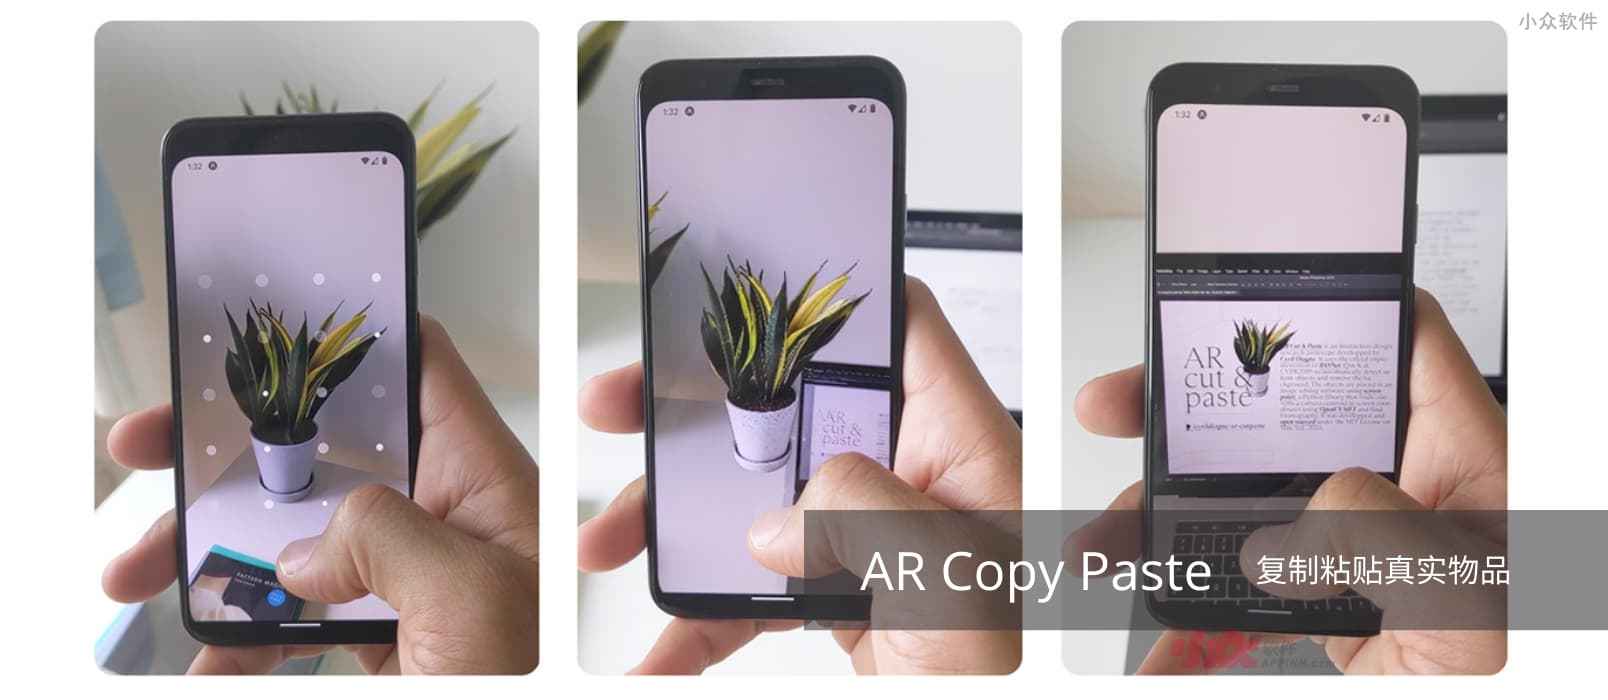 AR Copy Paste - 用 AR 复制粘贴真实物品到电脑中，支持 iPhone 与 Android 1